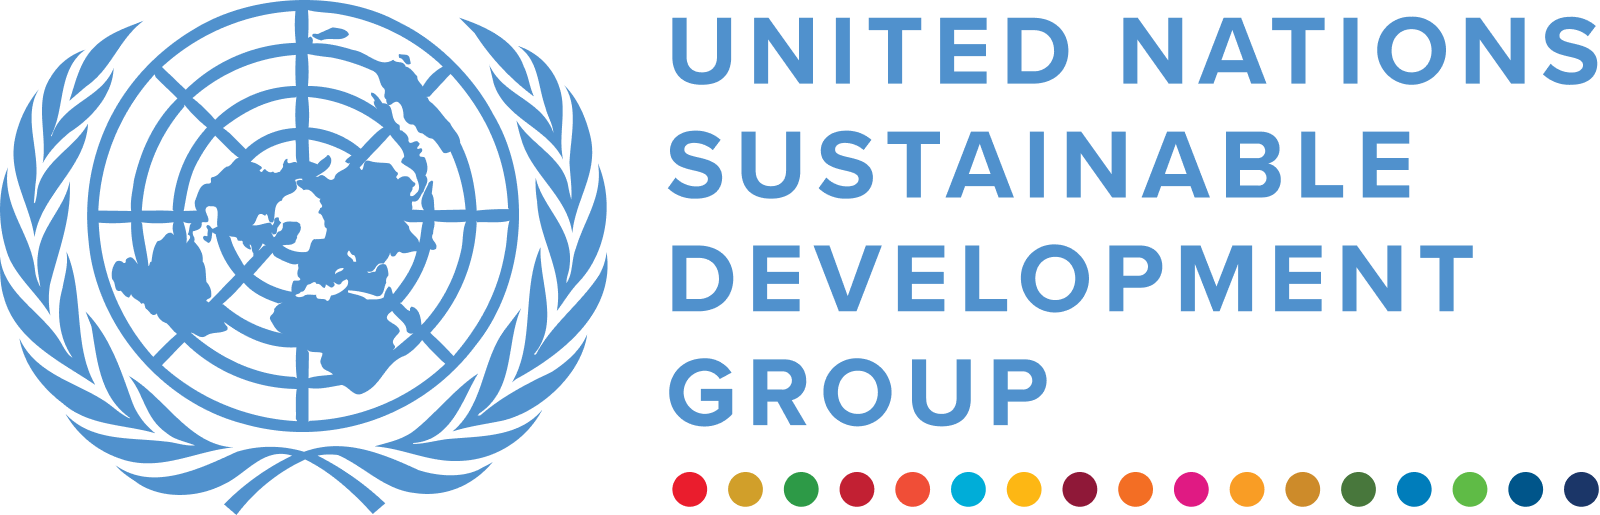 United Nations Sustainable Development Group Logo